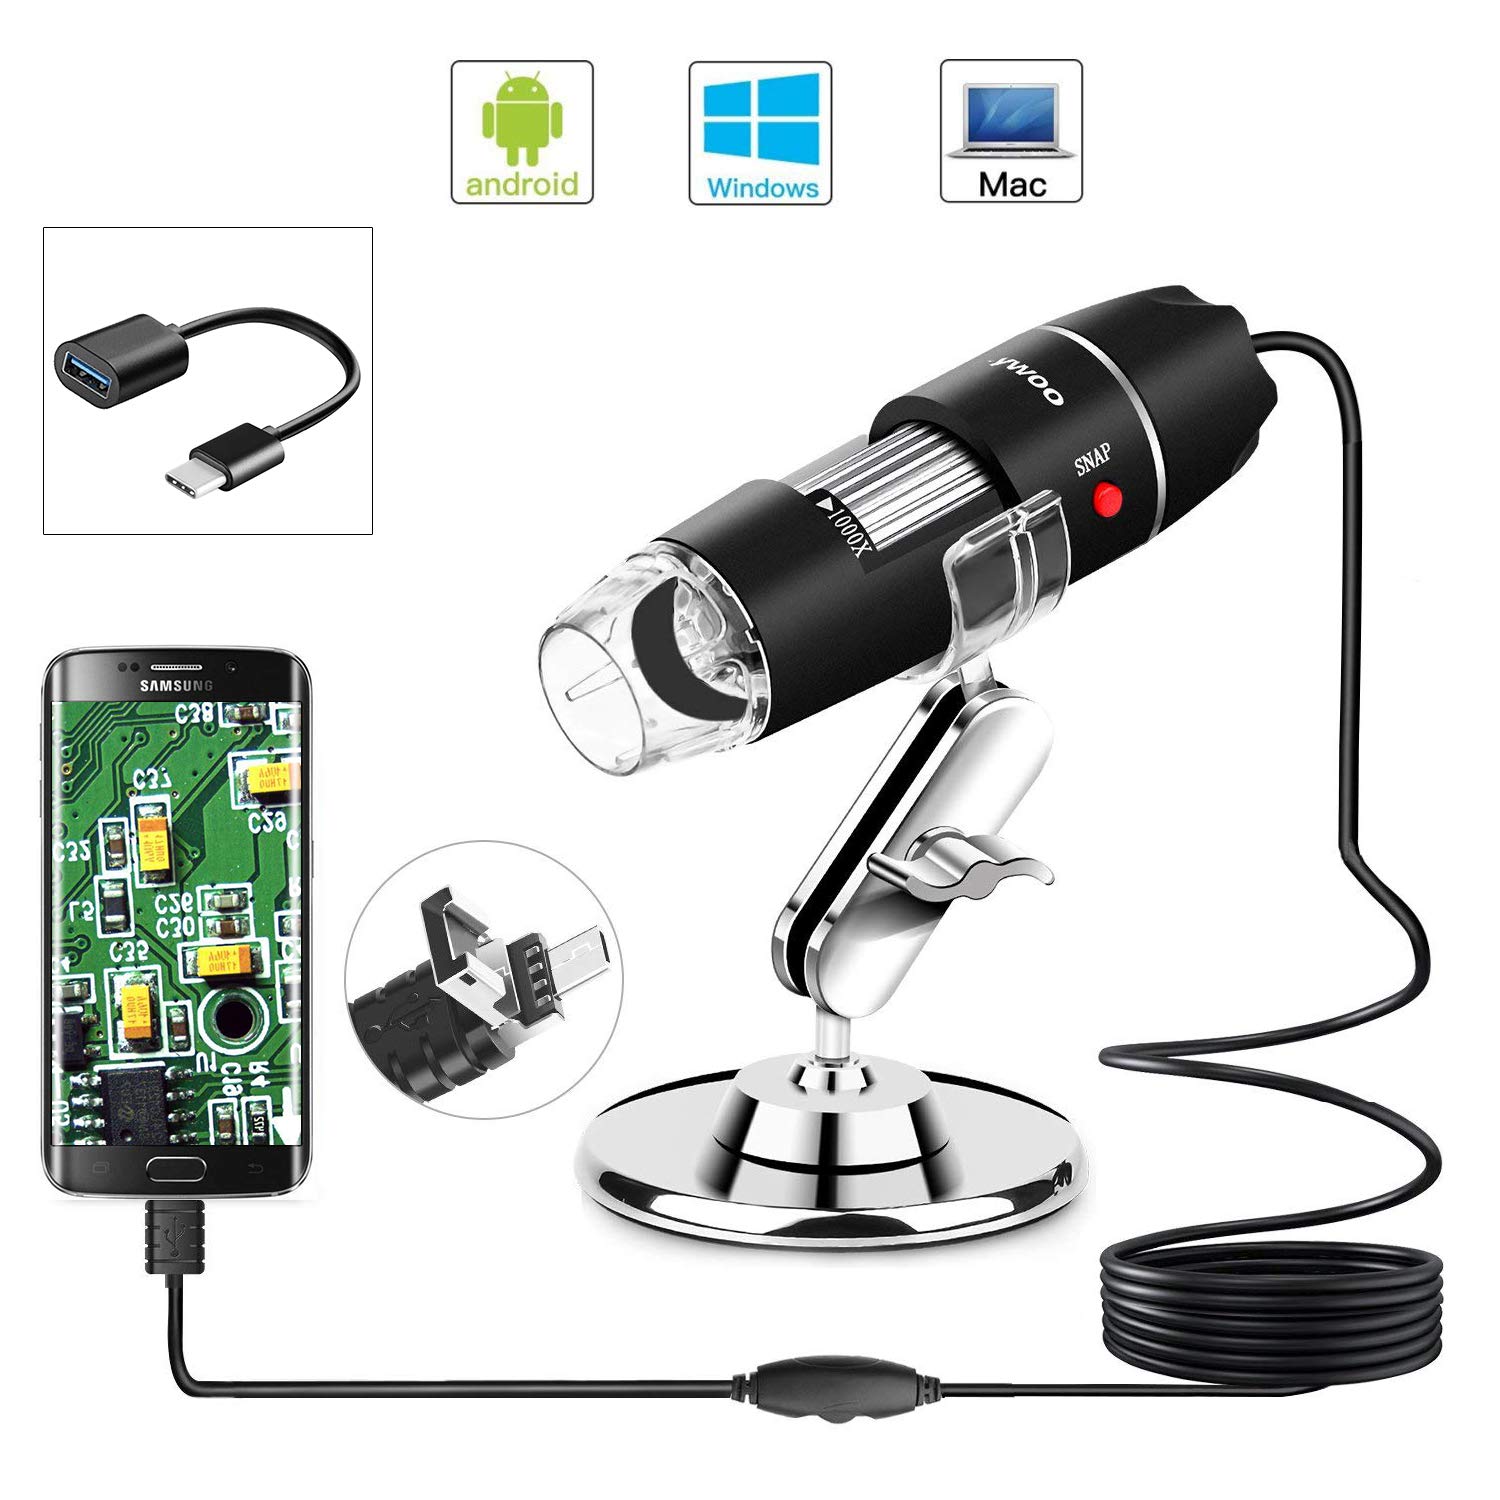 Digital microscope celestron download